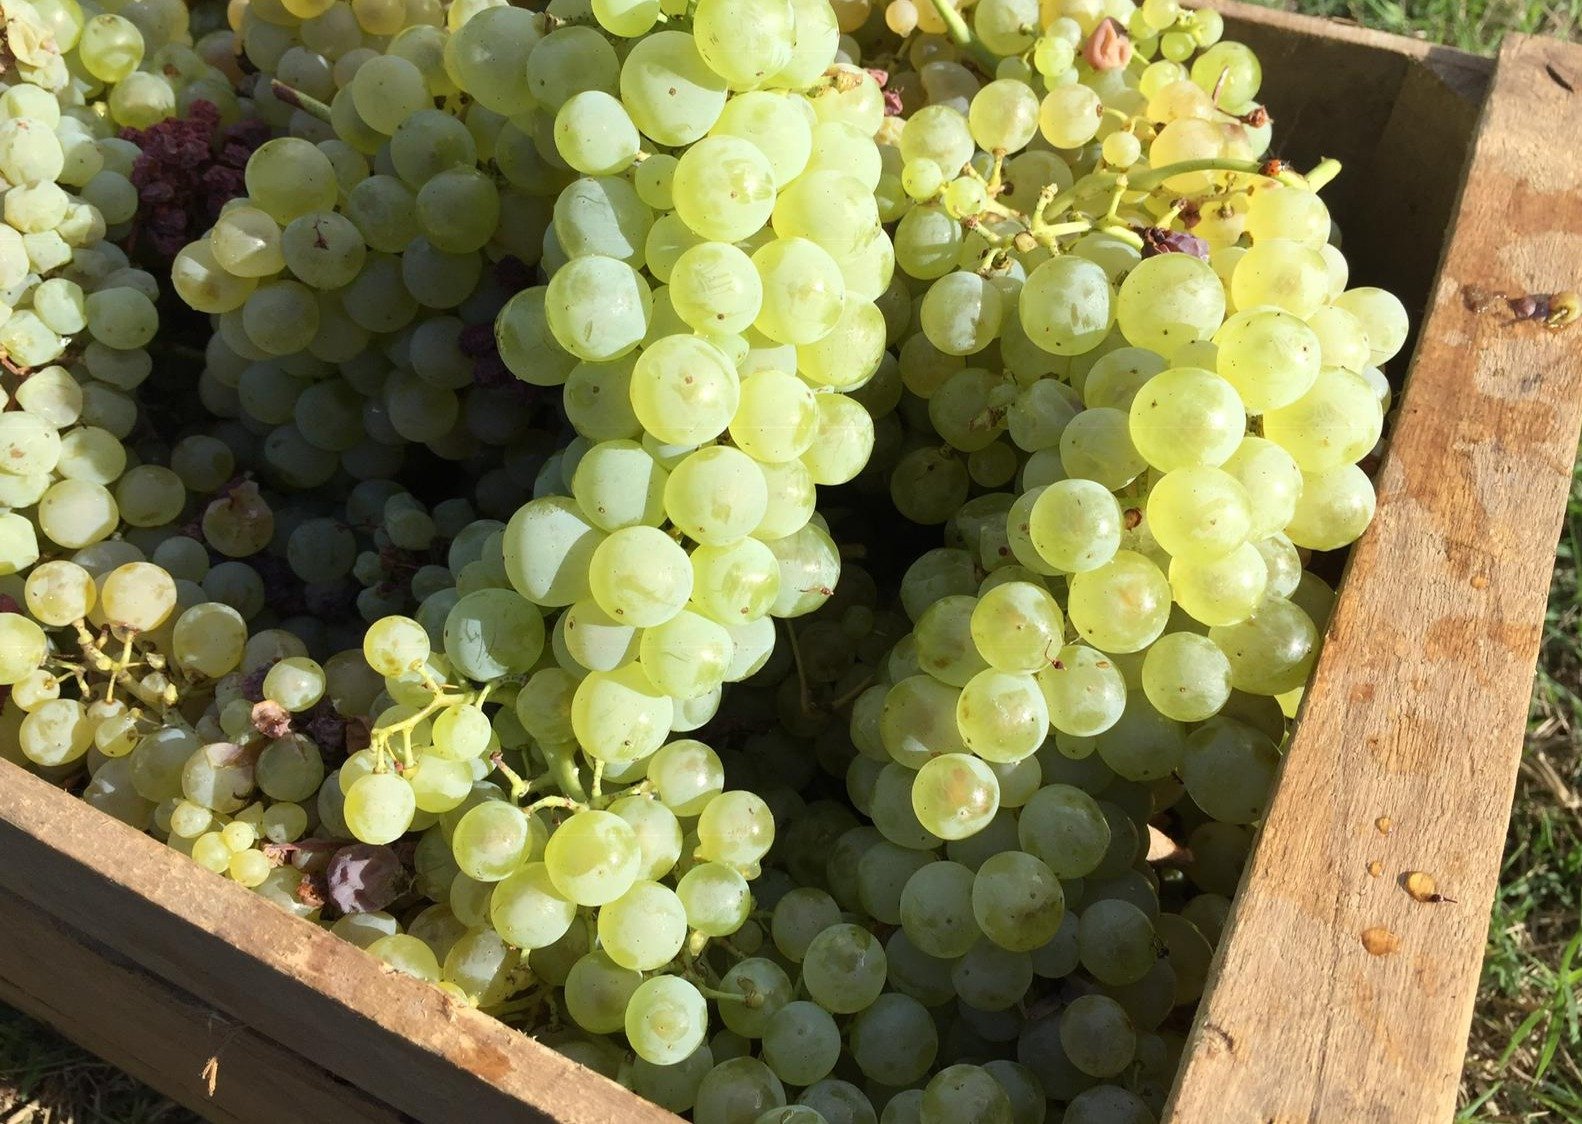 Grapes harvested in Reggio Emilia for balsamic vinegar